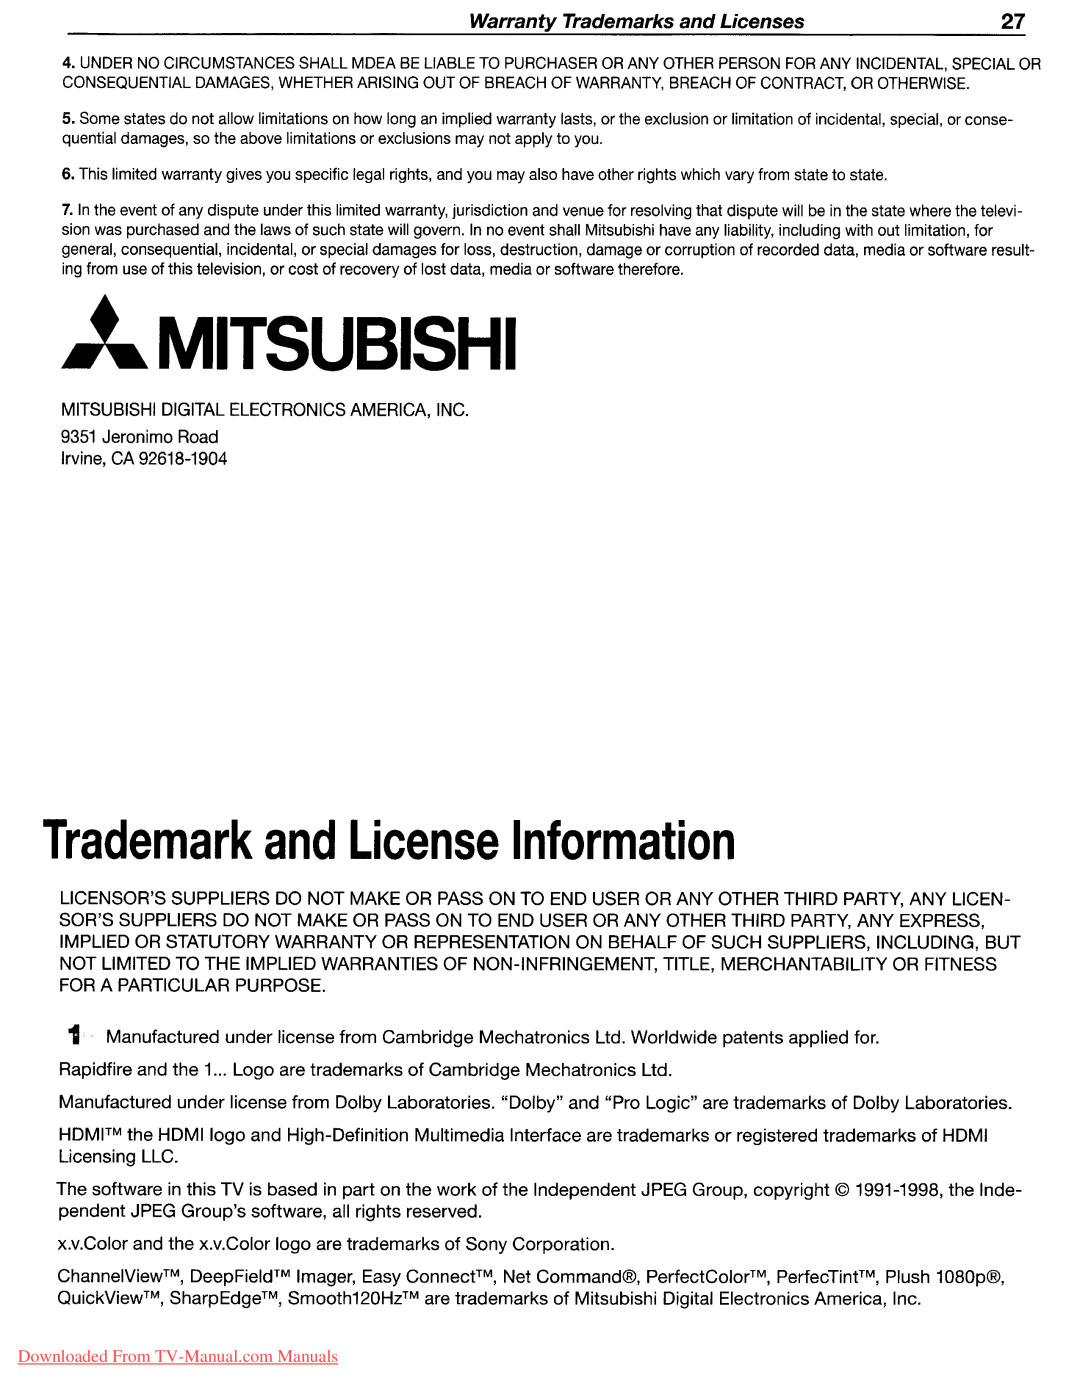 Mitsubishi Electronics 249, 153, 151 Trademark and License Information, J.. Mitsubishi, Warranty Trademarks and Licenses 